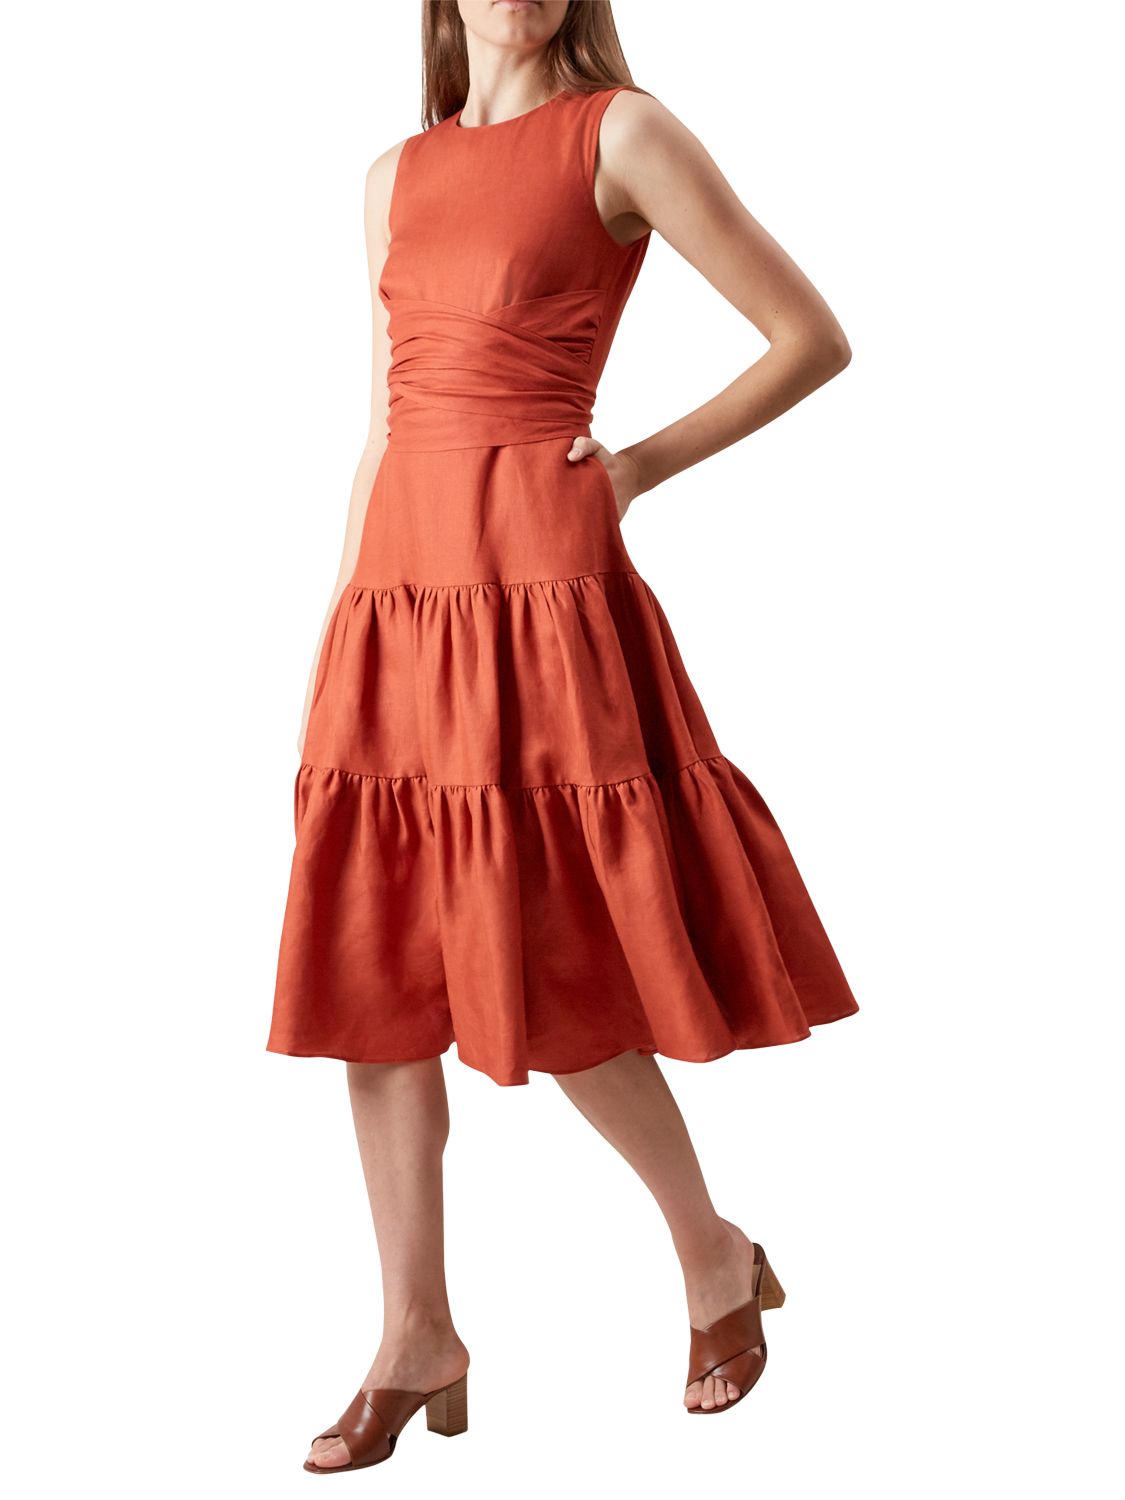 Hobbs Seville Dress, Cayenne Red, 18